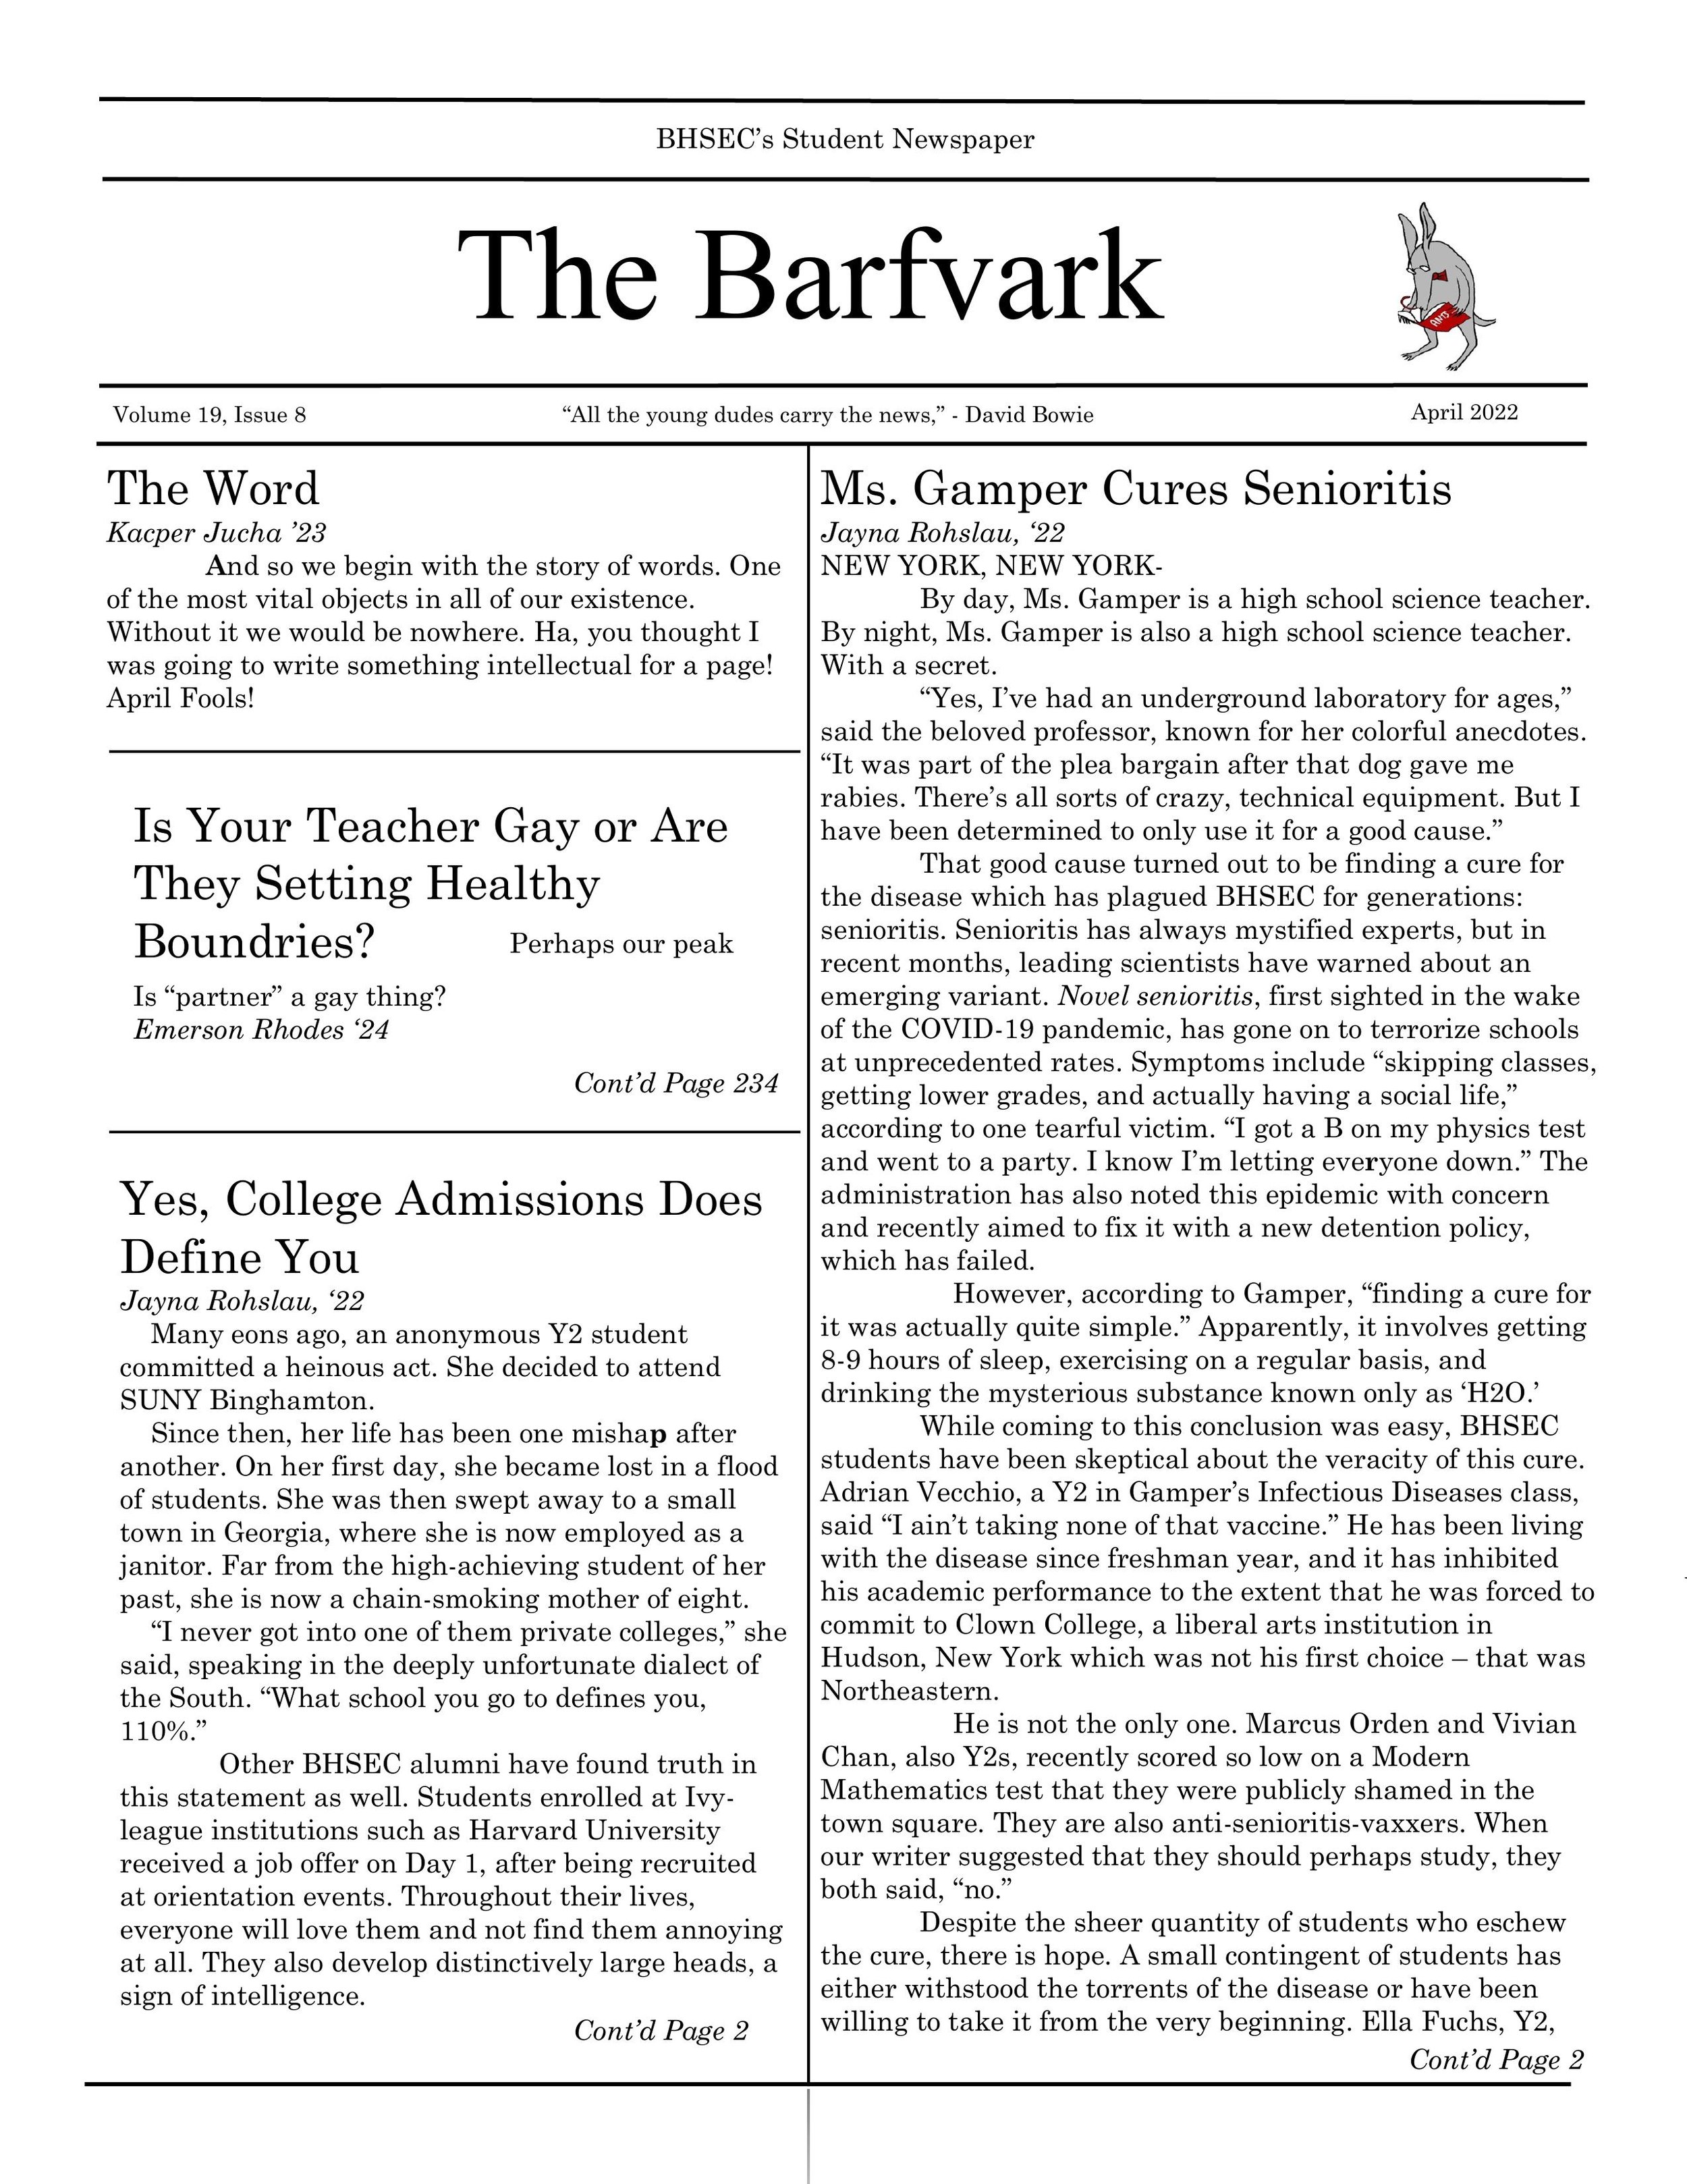 BARDVARK_April_Fools_Issue-1[1].jpg